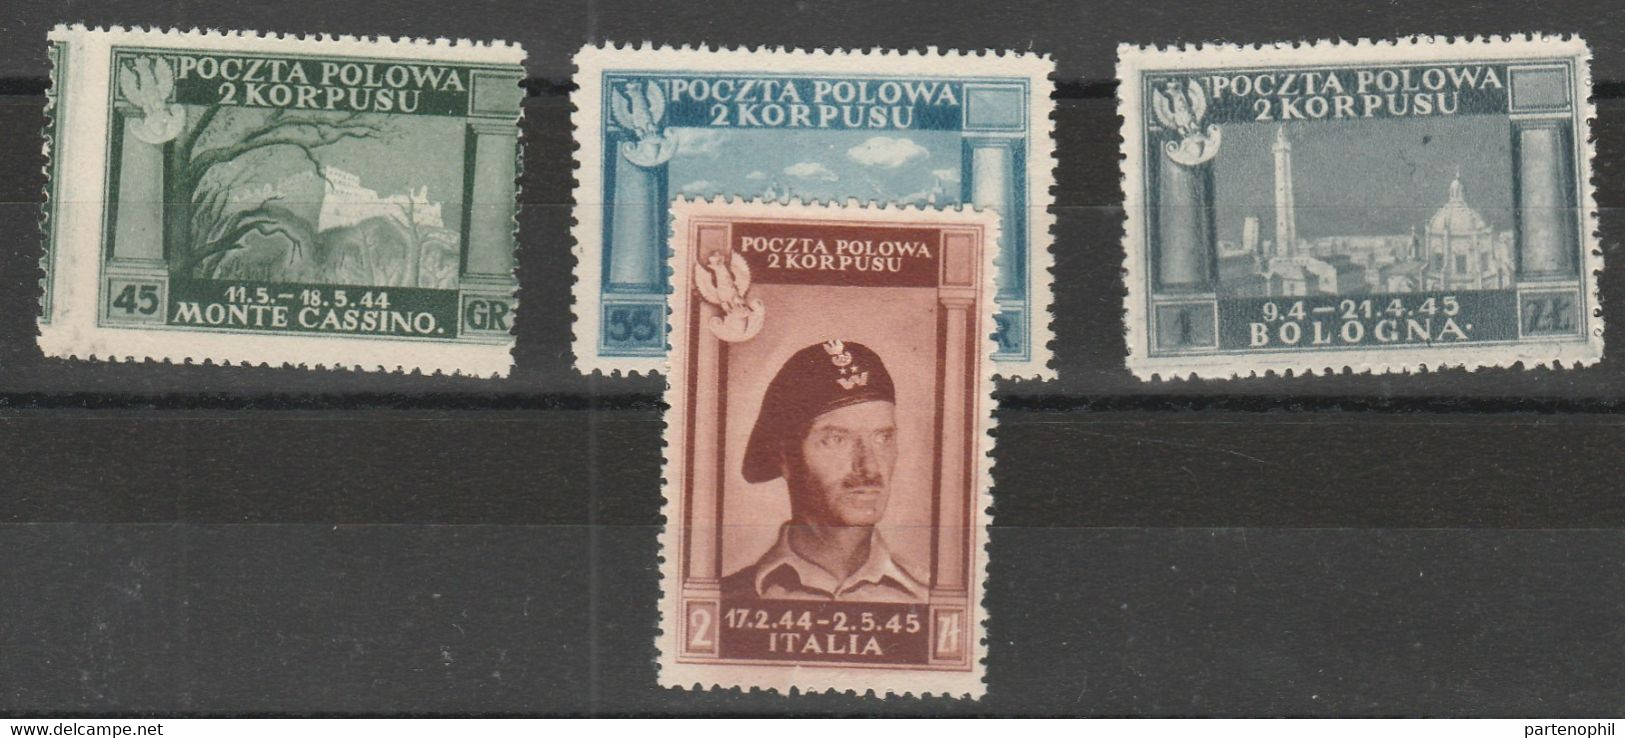 Corpo Polacco  235 - Vittorie Polacche N. 5/8. Cert. Biondi Cat. € 700,00. SPL - 1946-47 Corpo Polacco Periode